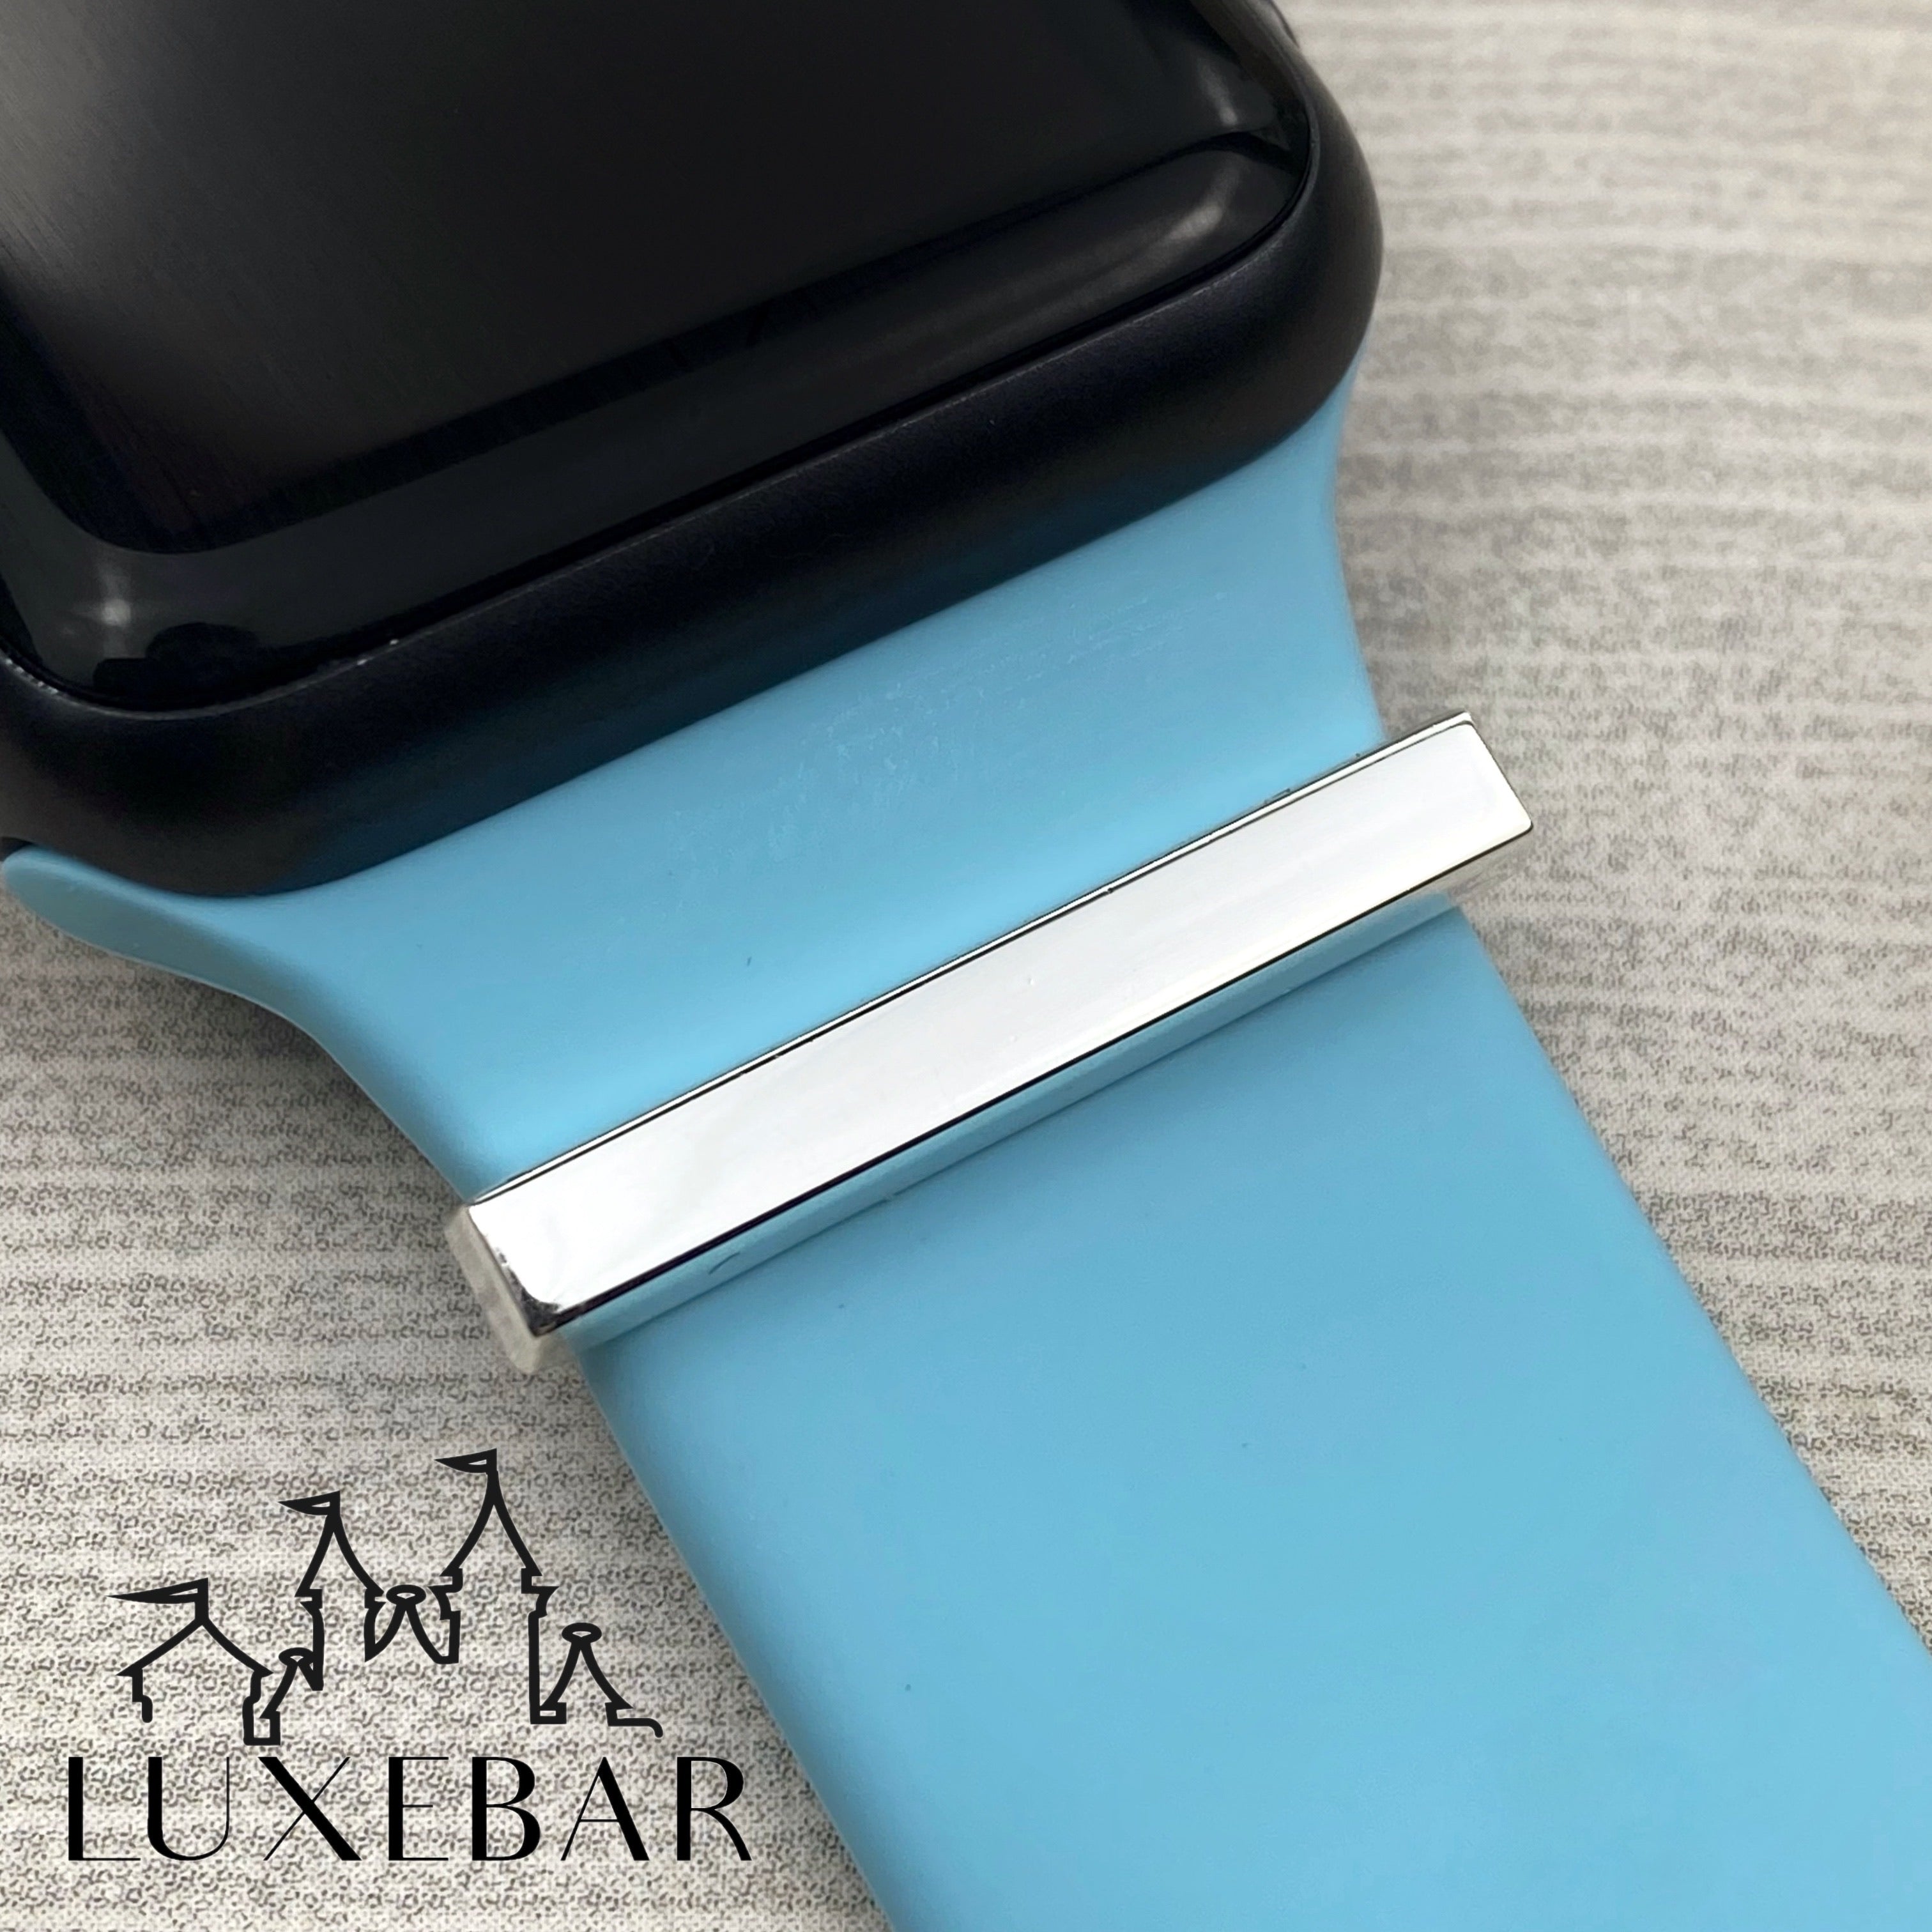 LuxeBar ~ 3mm Stack Bars MARKDOWN